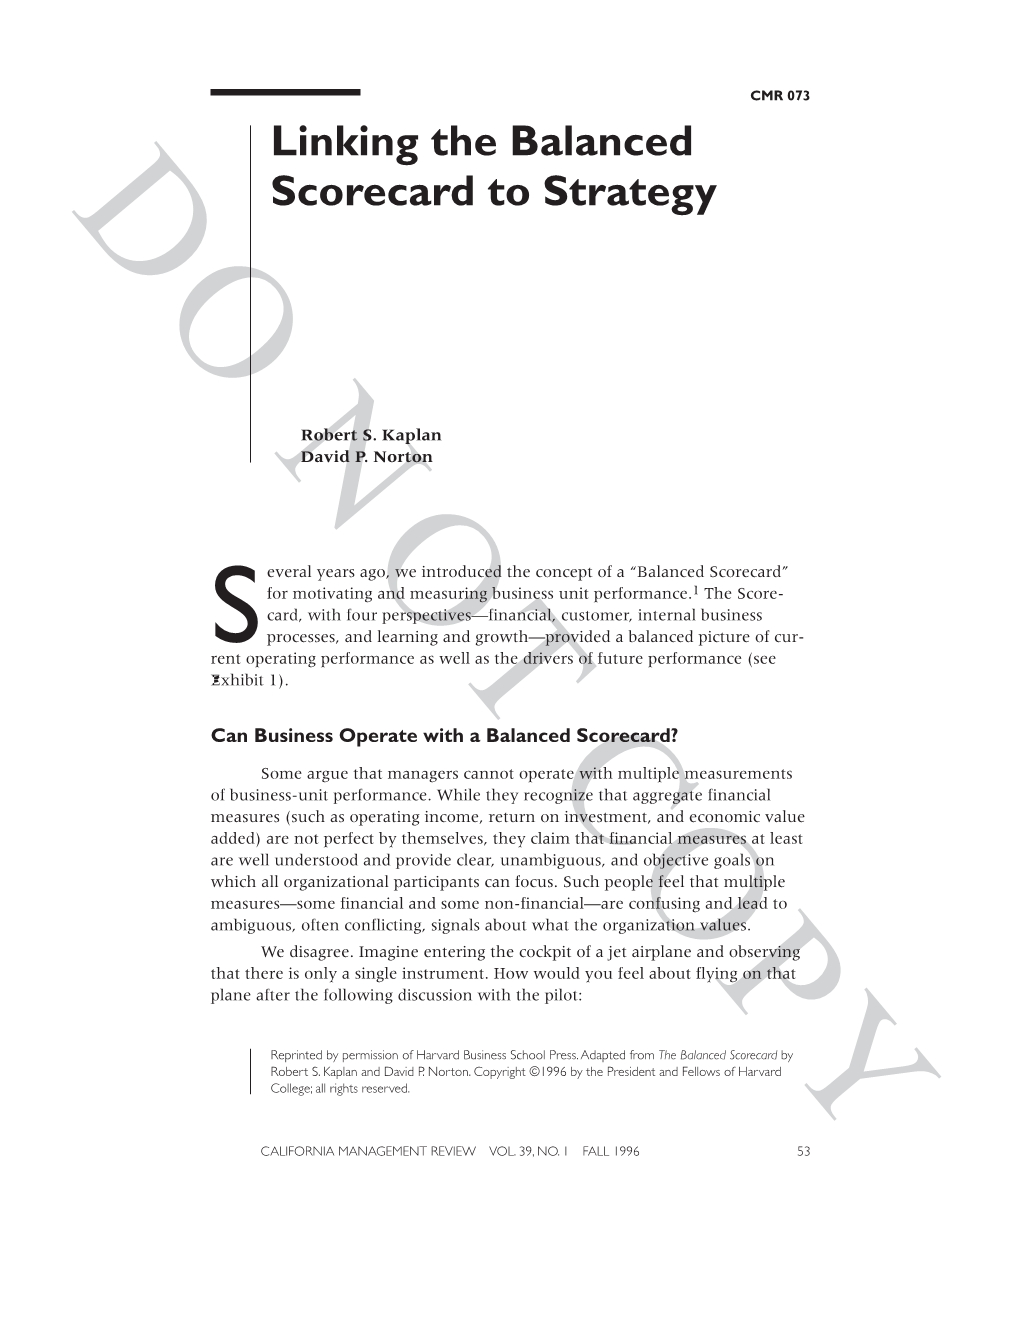 Linking the Balanced Scorecard to Strategy CMR 073 DOEXHIBIT NOT 1